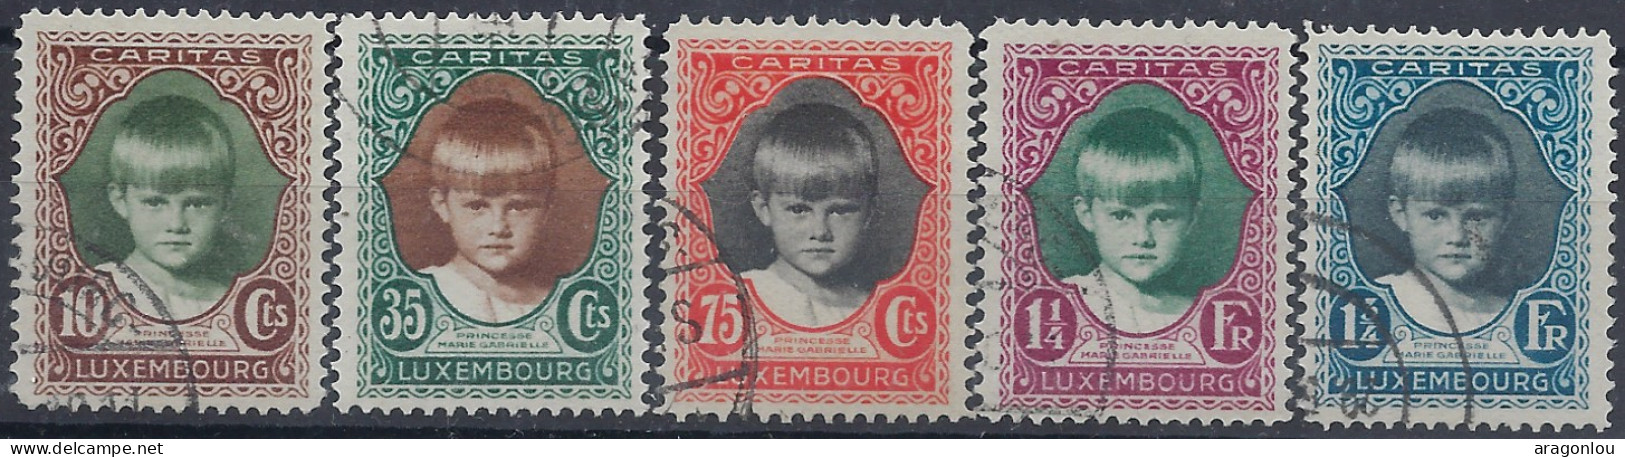 Luxembourg - Luxemburg - Timbres - 1929   Caritas   Princesse Marie-Gabrielle   Série   ° - Blocs & Feuillets